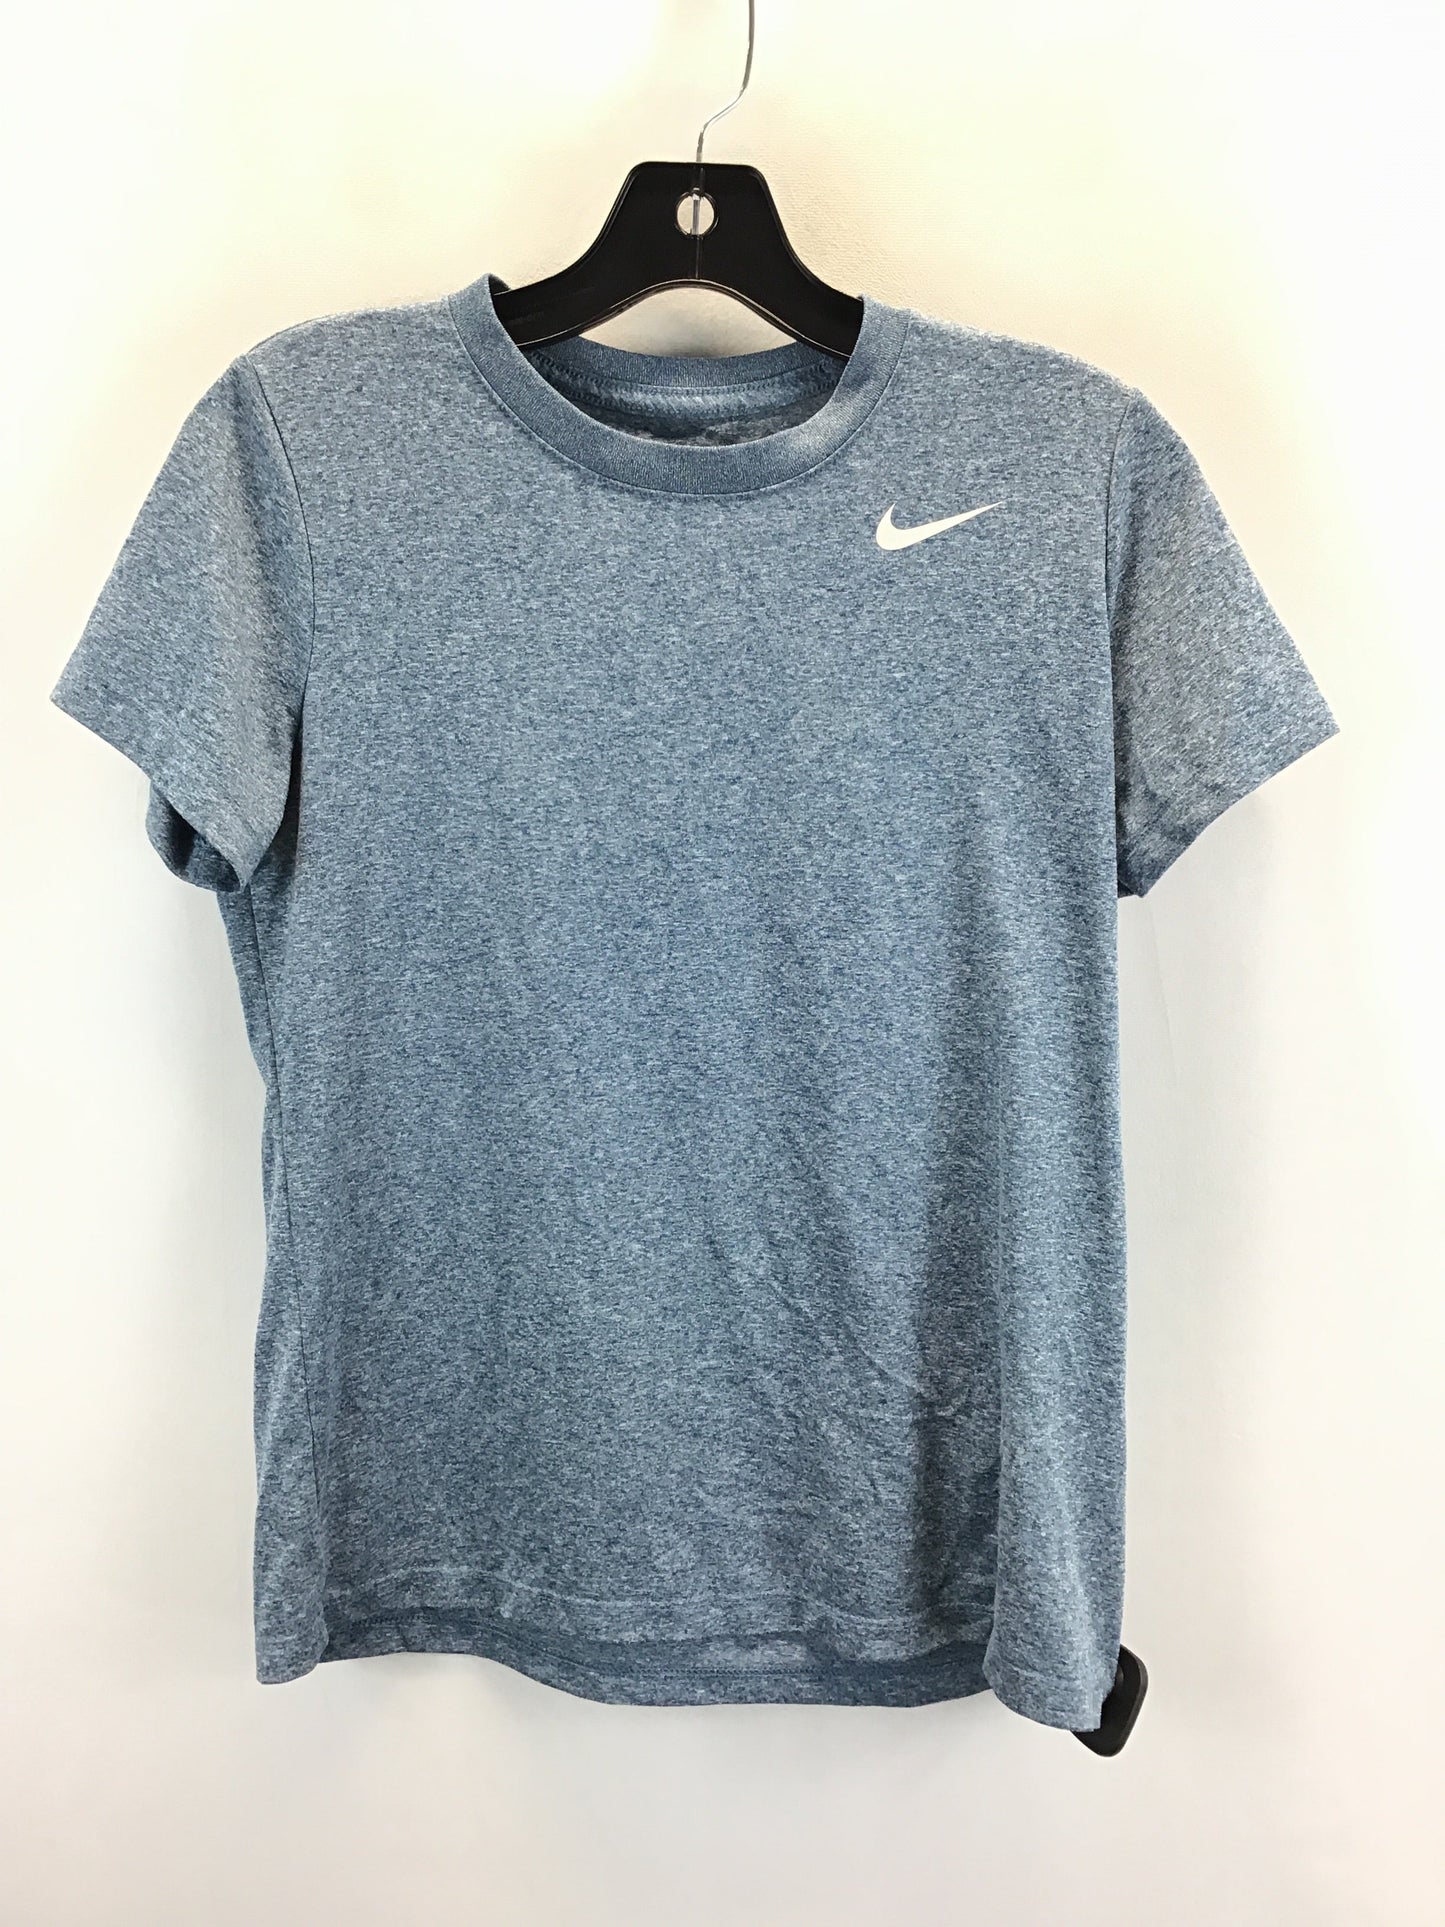 Blue Top Short Sleeve Nike, Size M